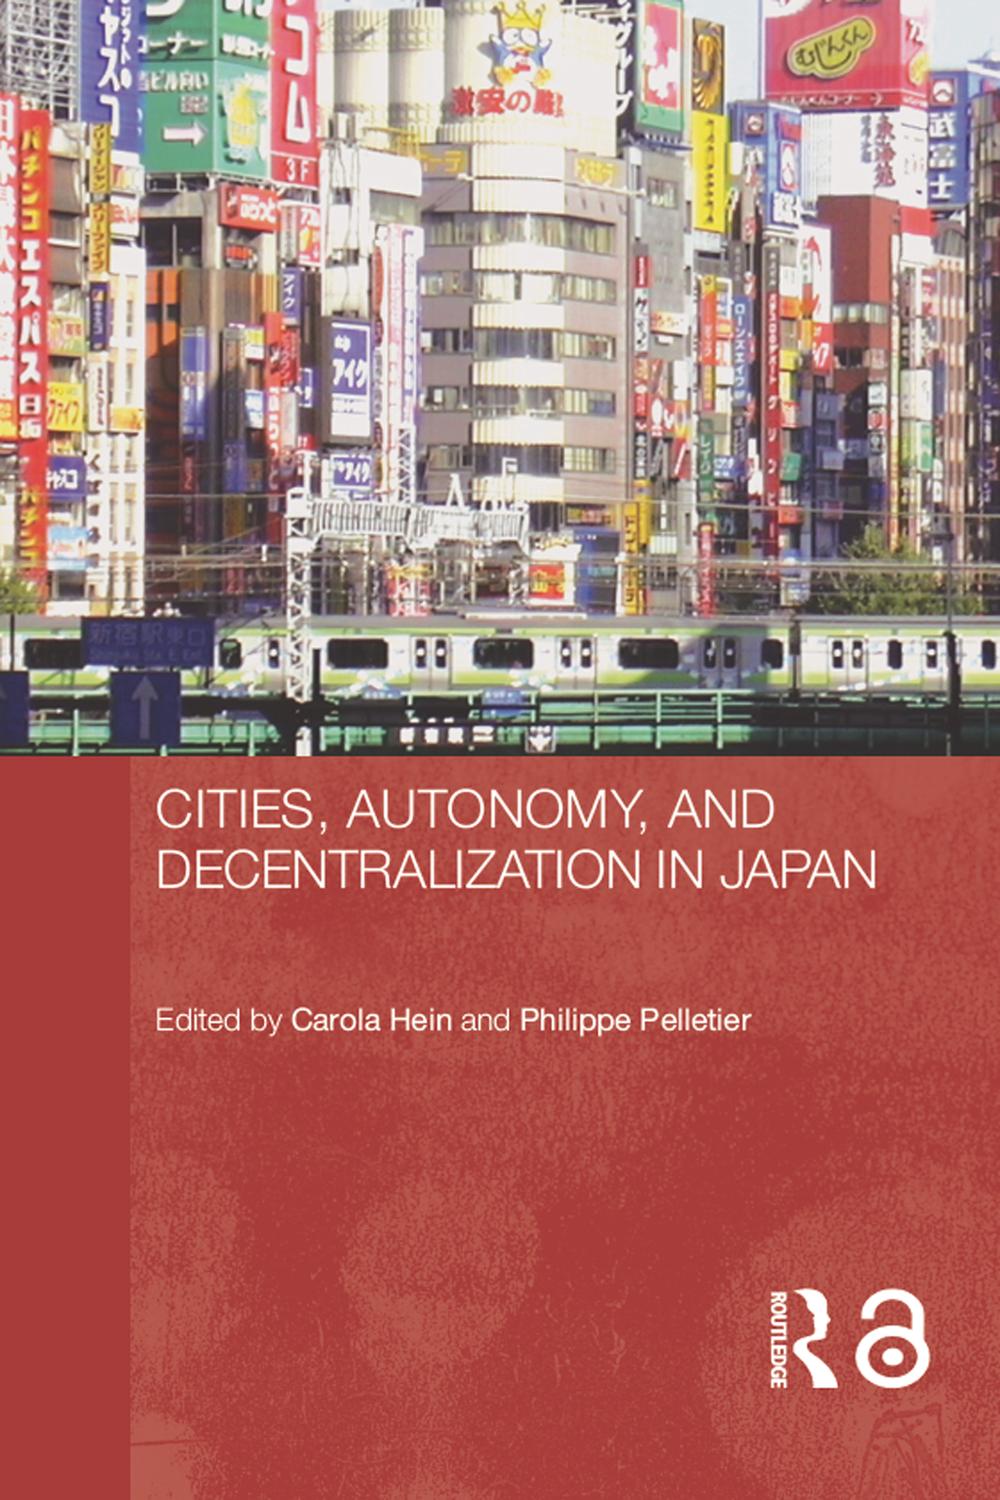 Cities, Autonomy, and Decentralization in Japan - Carola Hein, Philippe Pelletier